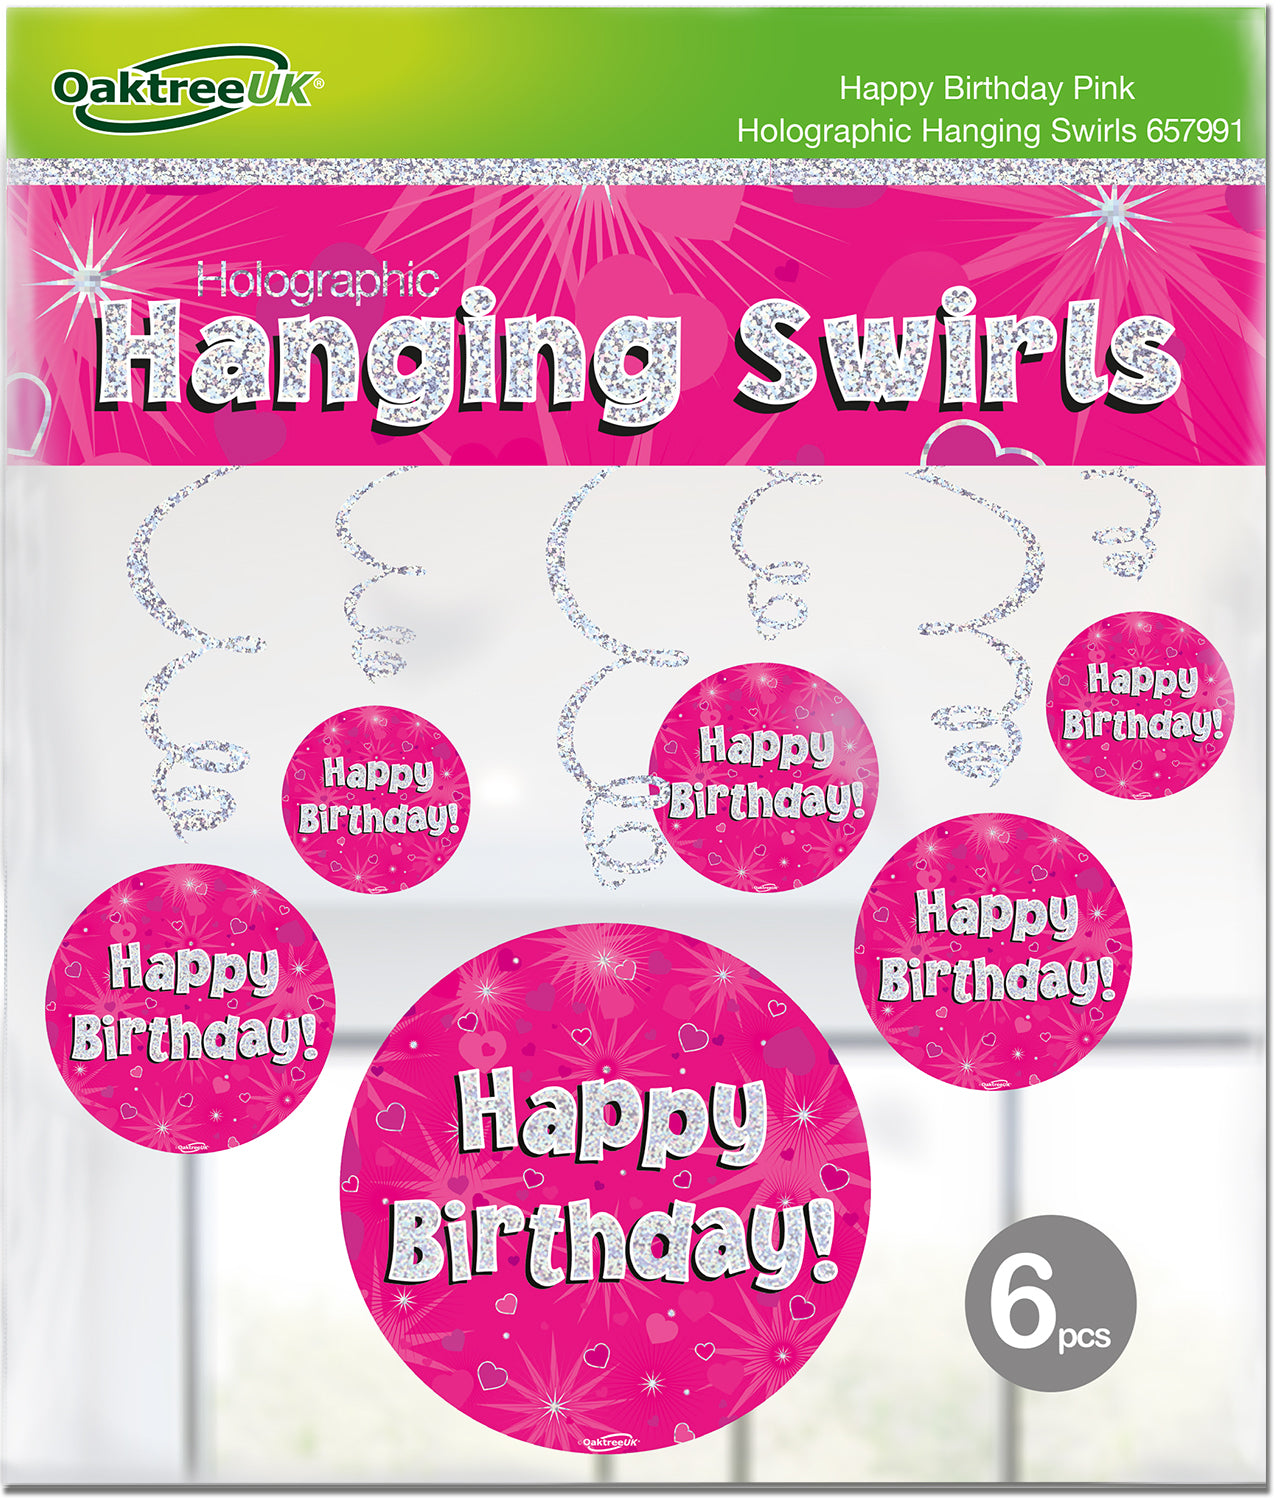 Happy Birthday Holographic Pink Hanging Swirls 6pcs